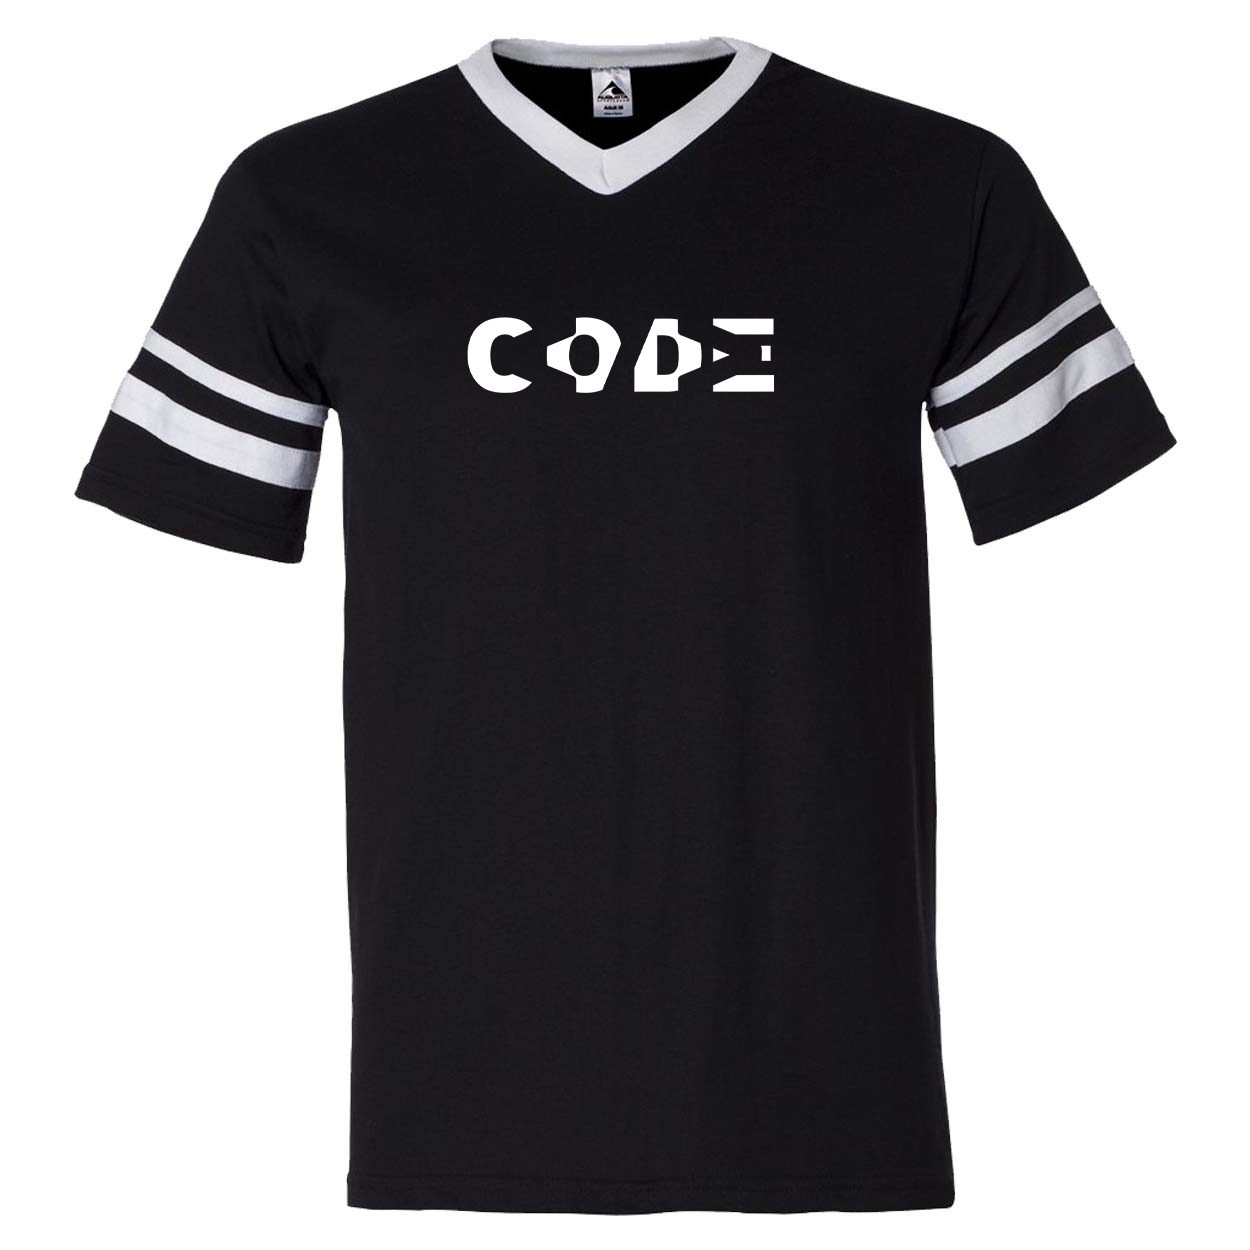 Code Tag Logo Classic Premium Striped Jersey T-Shirt Black/White (White Logo)